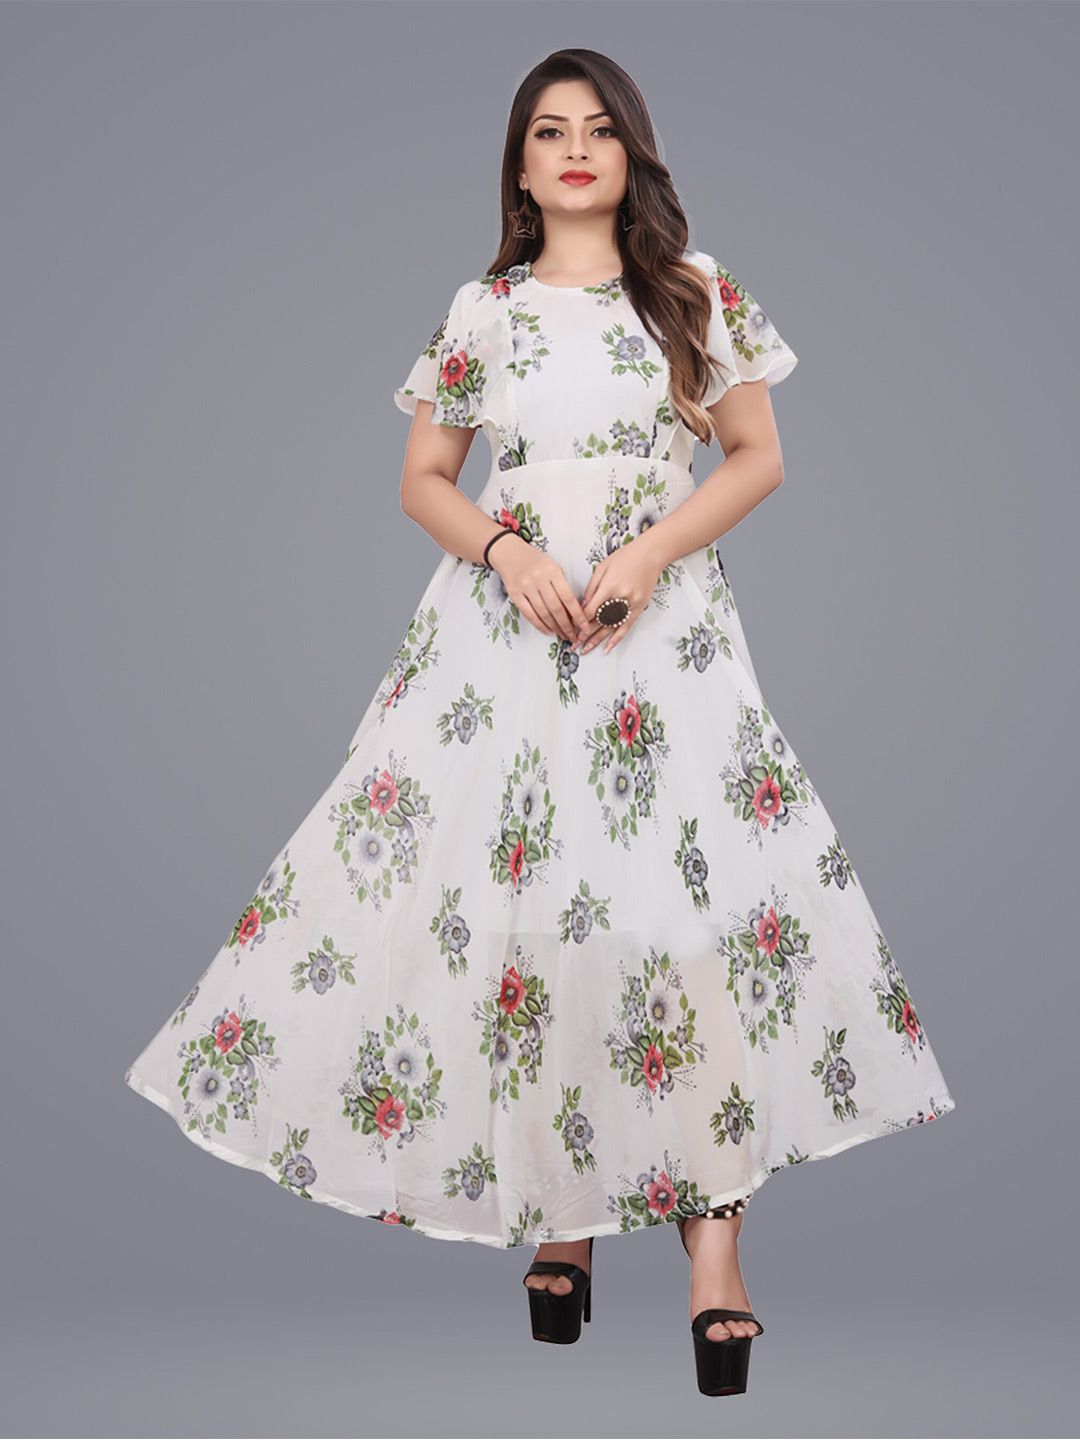 N N ENTERPRISE Floral Print Flared Sleeve Maxi Dress Price in India